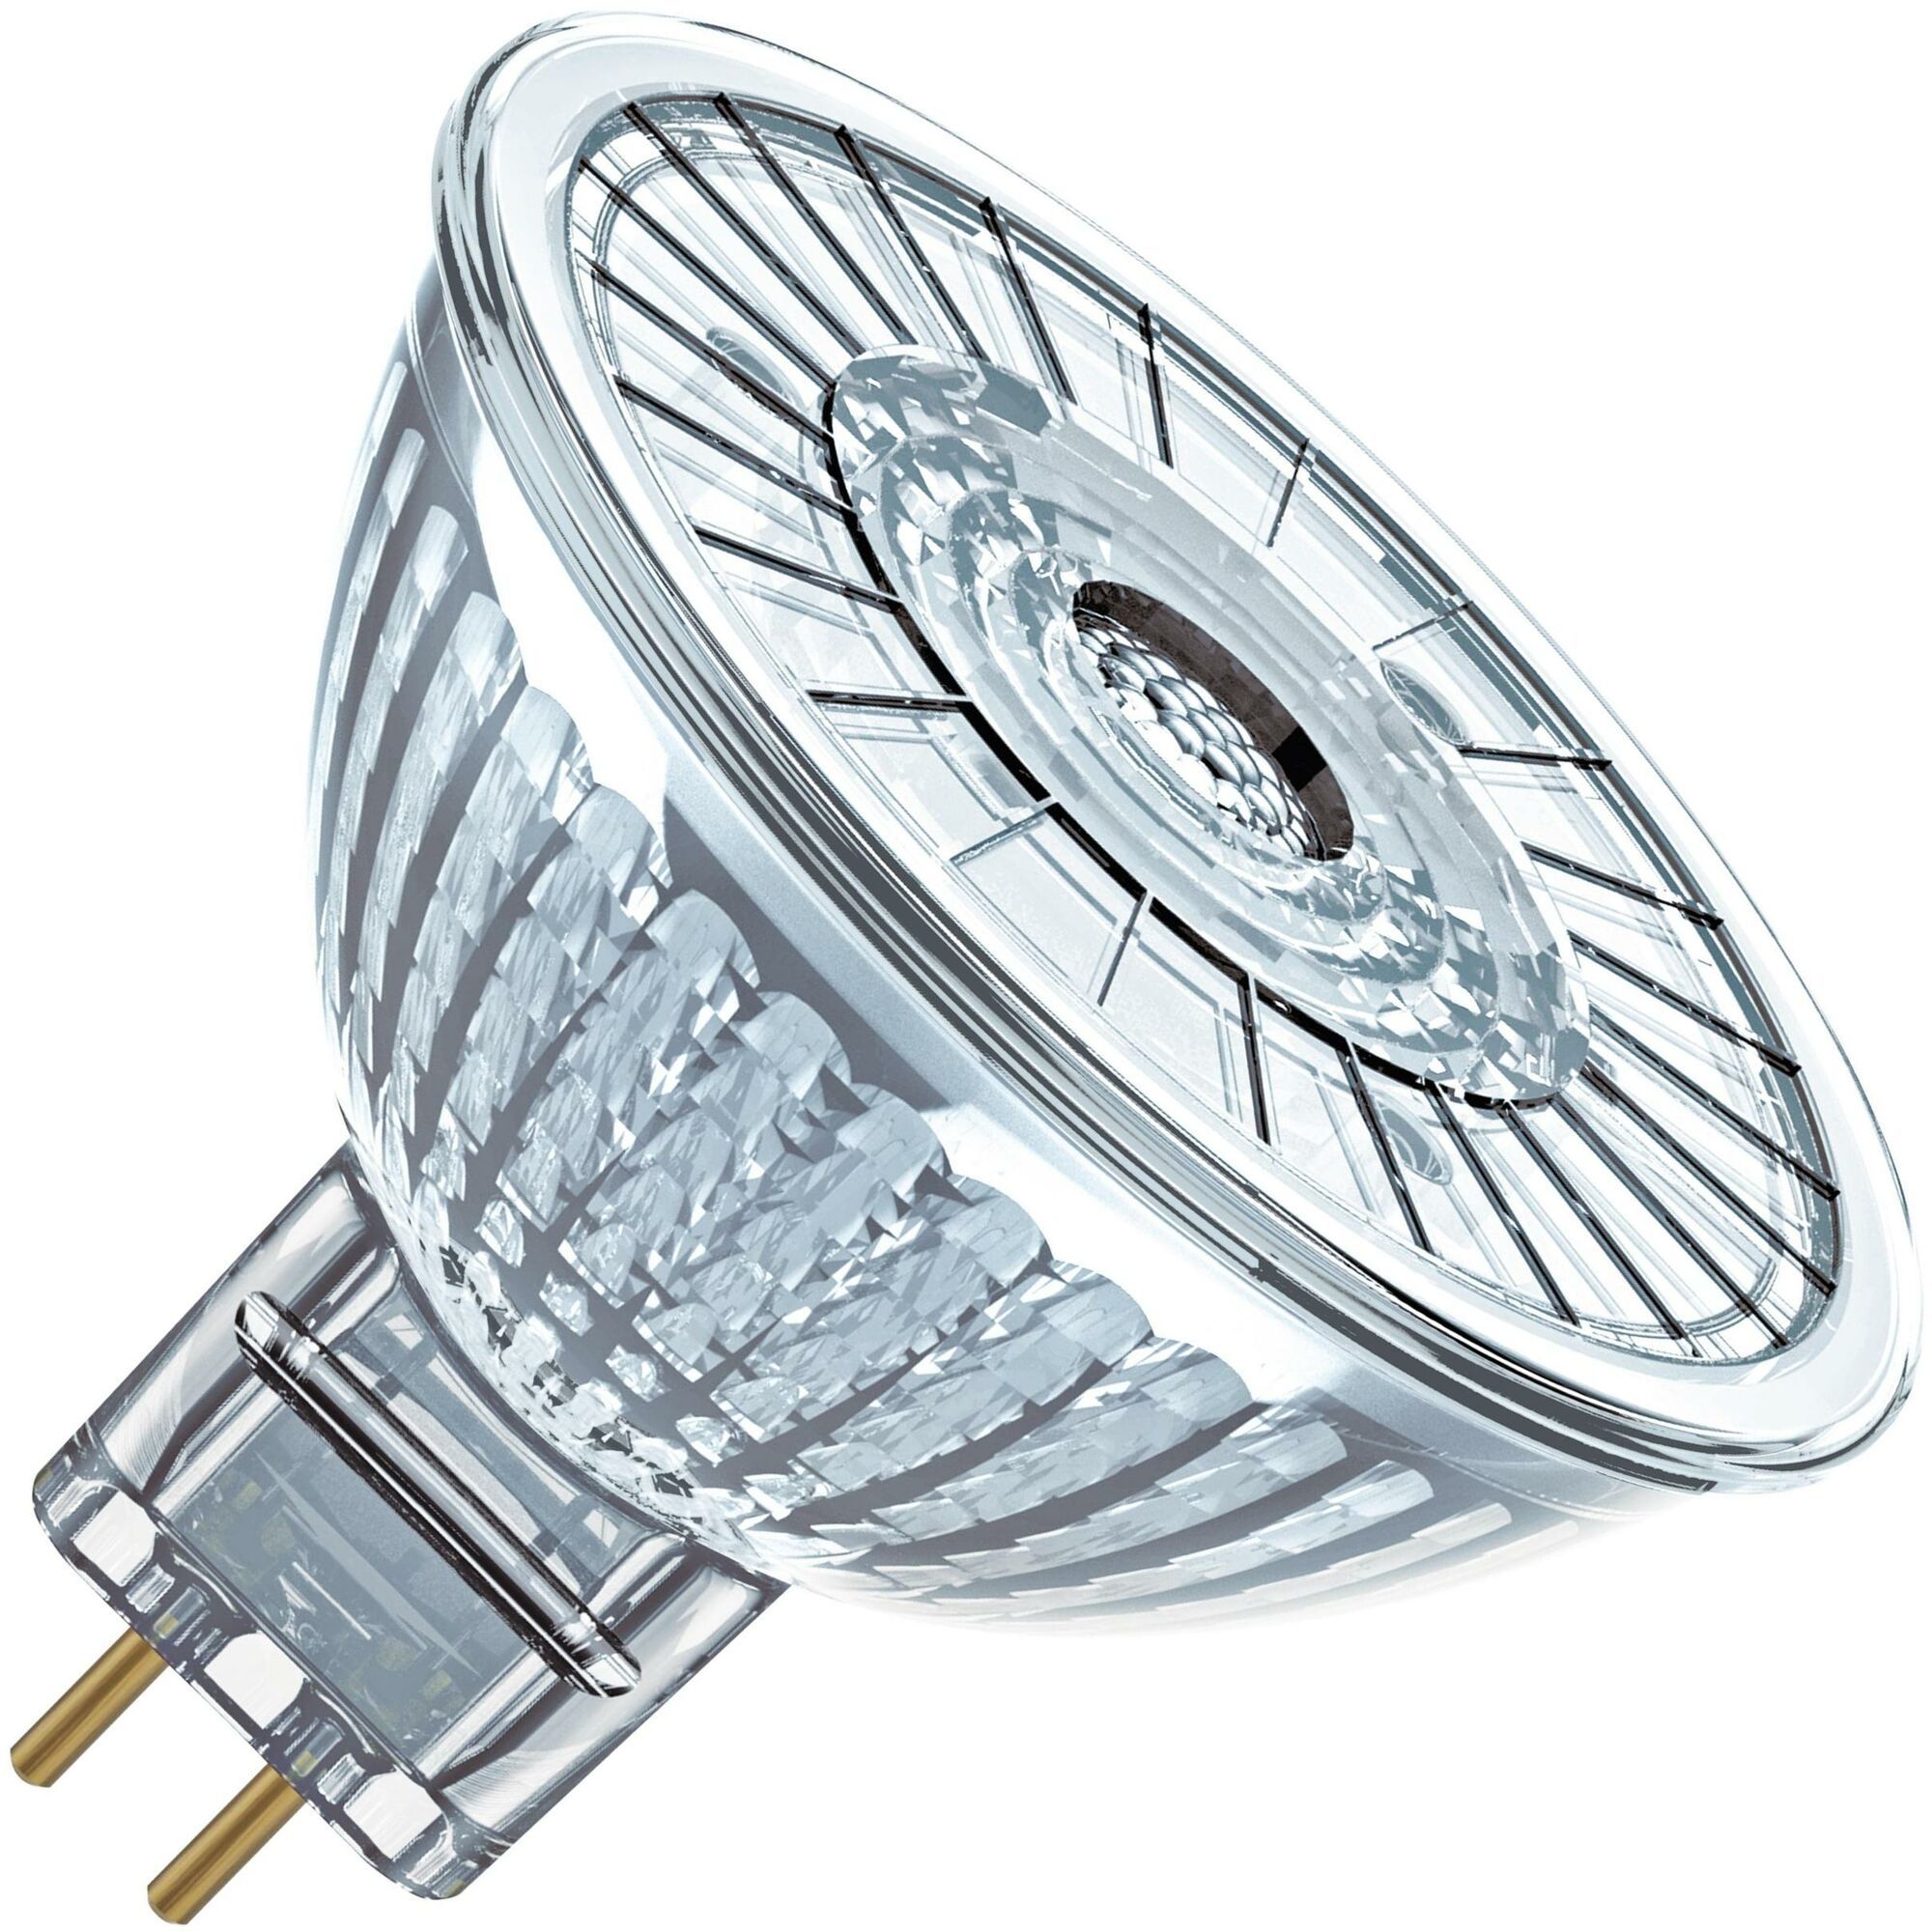 Osram led 12v. Лампа светодиодная Osram led mr16. Лампа mr16 gu 5.3 (5w, 4000k). Светодиодная лампа 5w mr16. Лампа mr16 gu5.3 светодиодная 12 v.